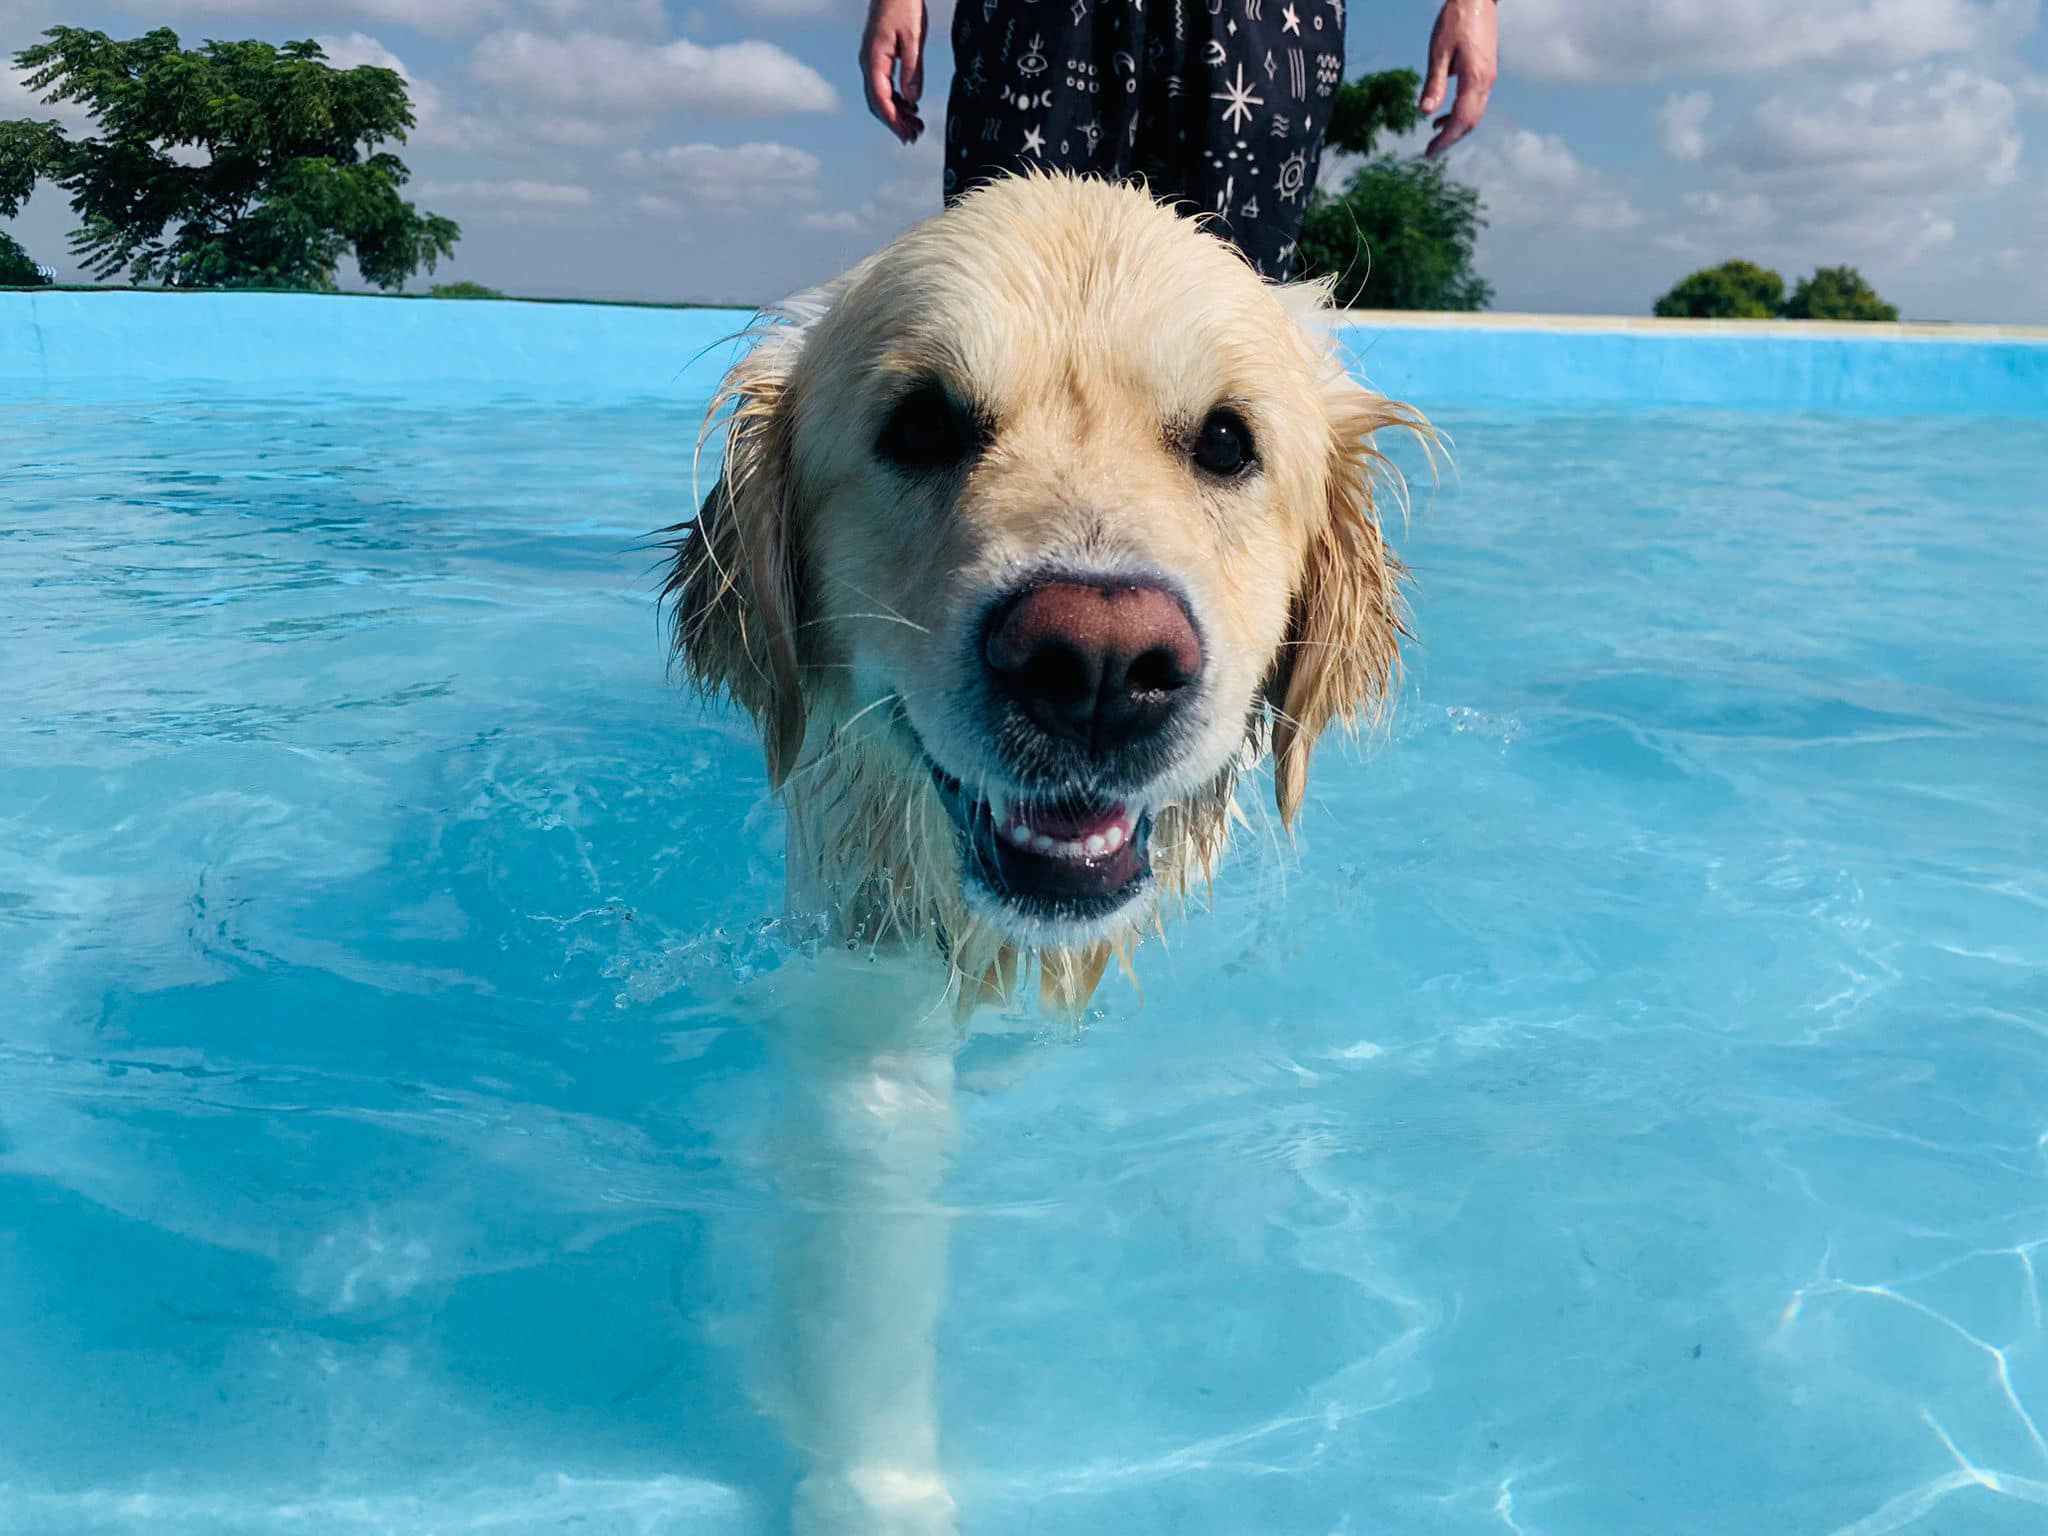 Dogs get their very first dedicated water park in Spain's Costa Blanda